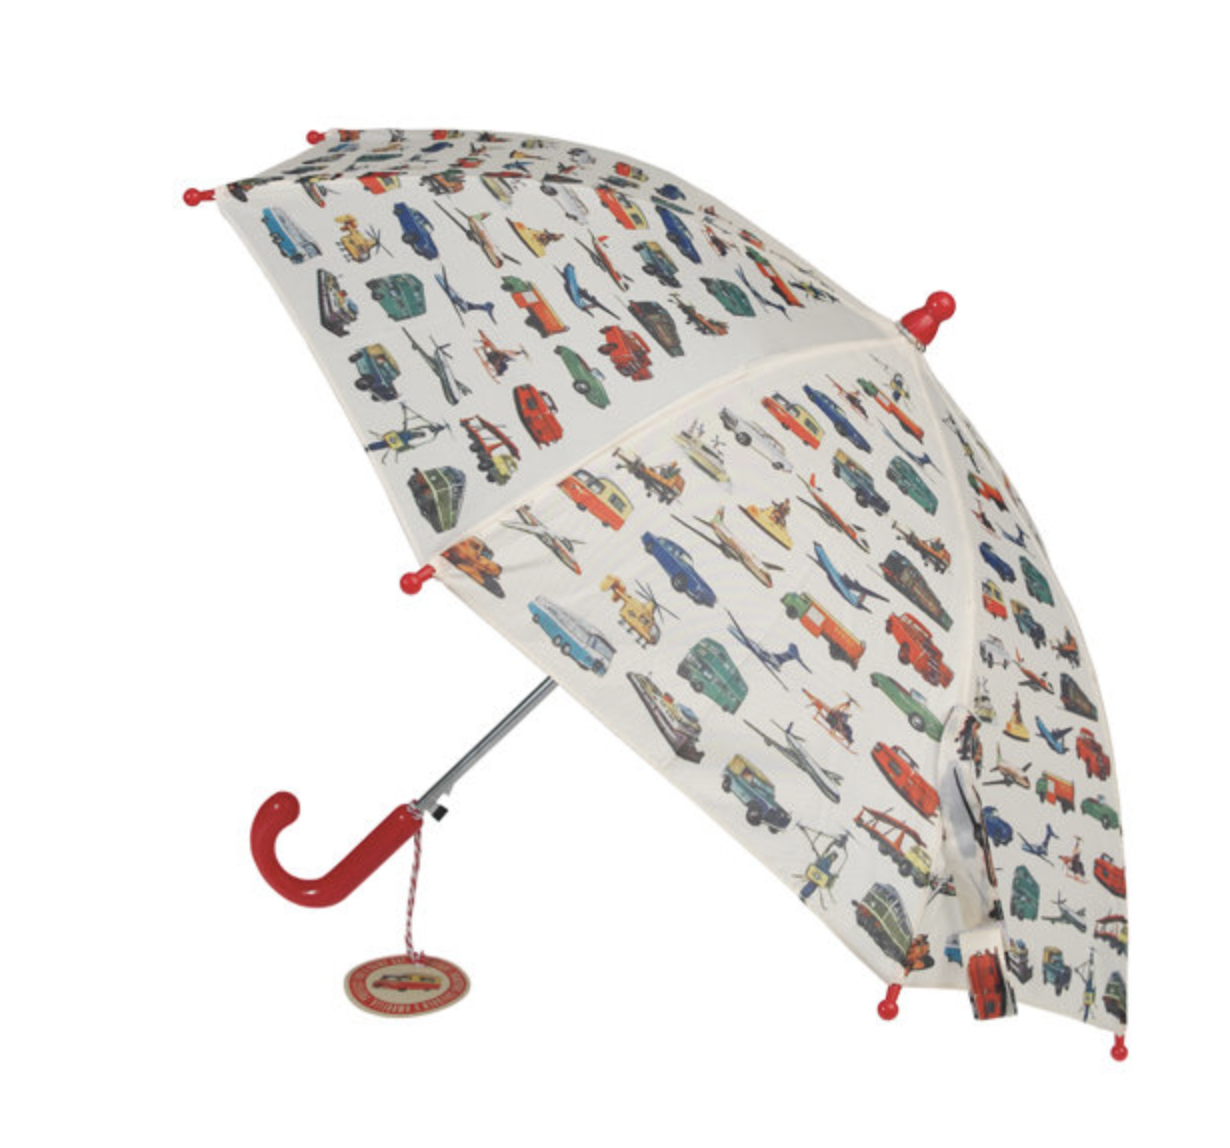 Vintage Transport Children's Umbrella